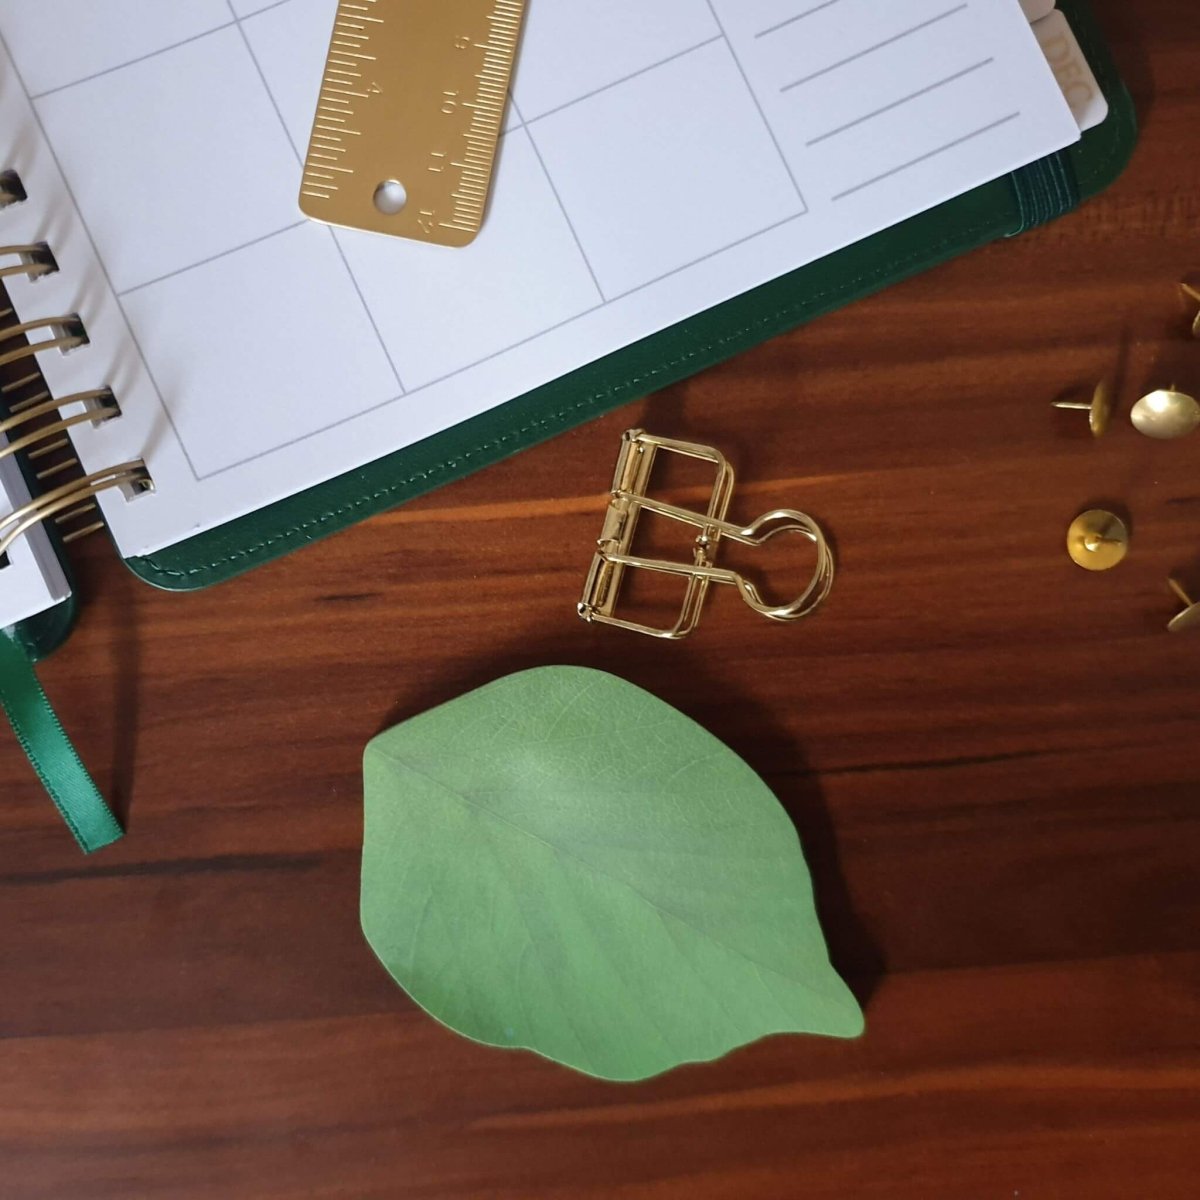 green leaf sticky notes on desk with stationery